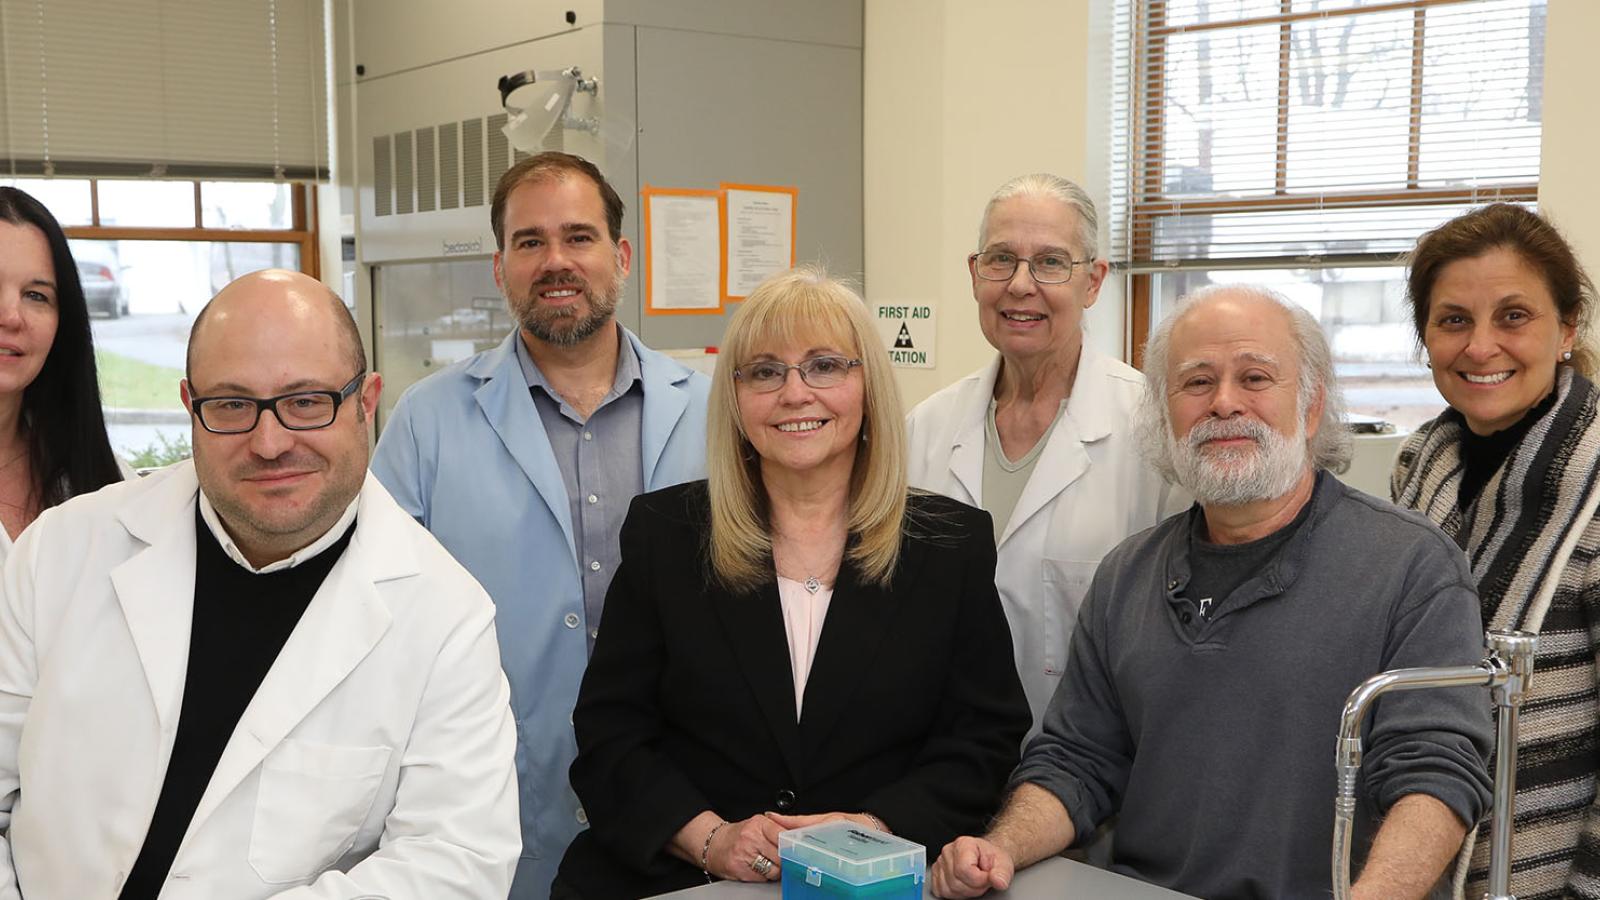 Group photo of biology professors